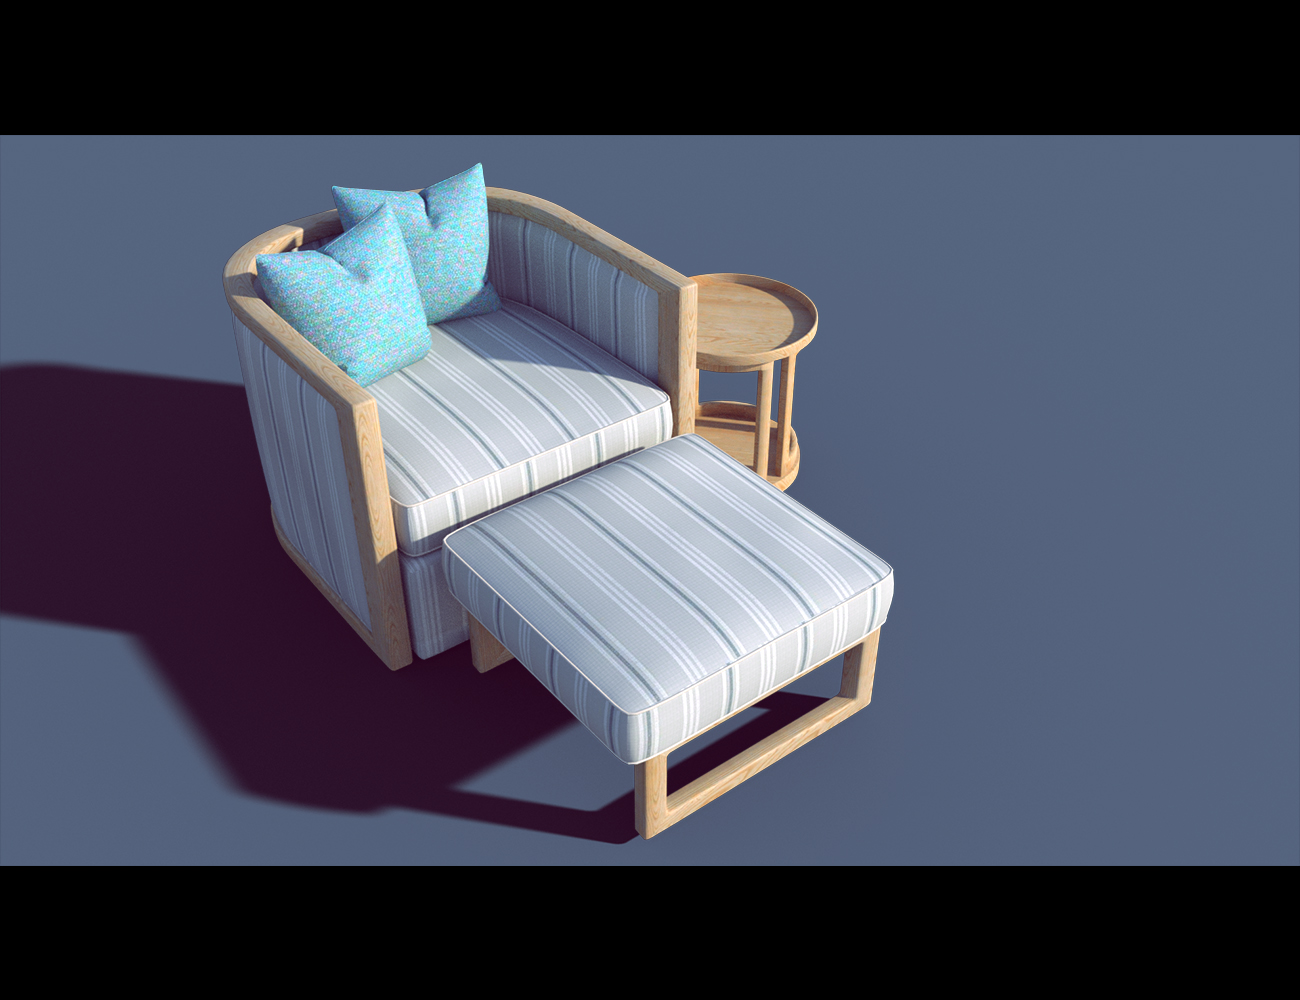 Honeymoon Bedroom Props by: Polish, 3D Models by Daz 3D